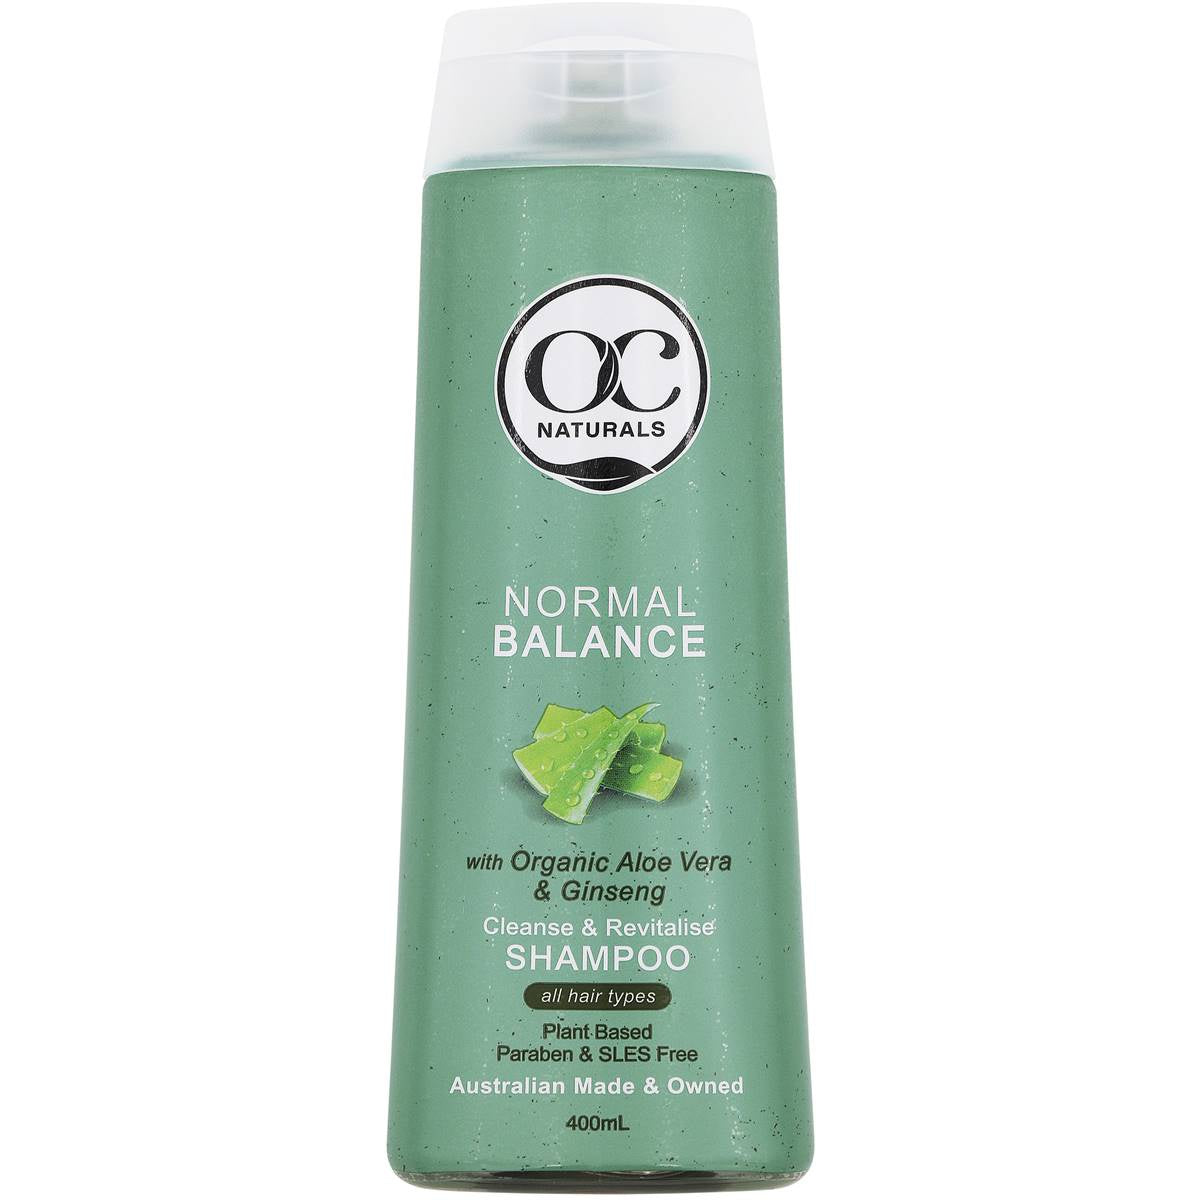 Oc Naturals Shampoo Normal Balance 400ml